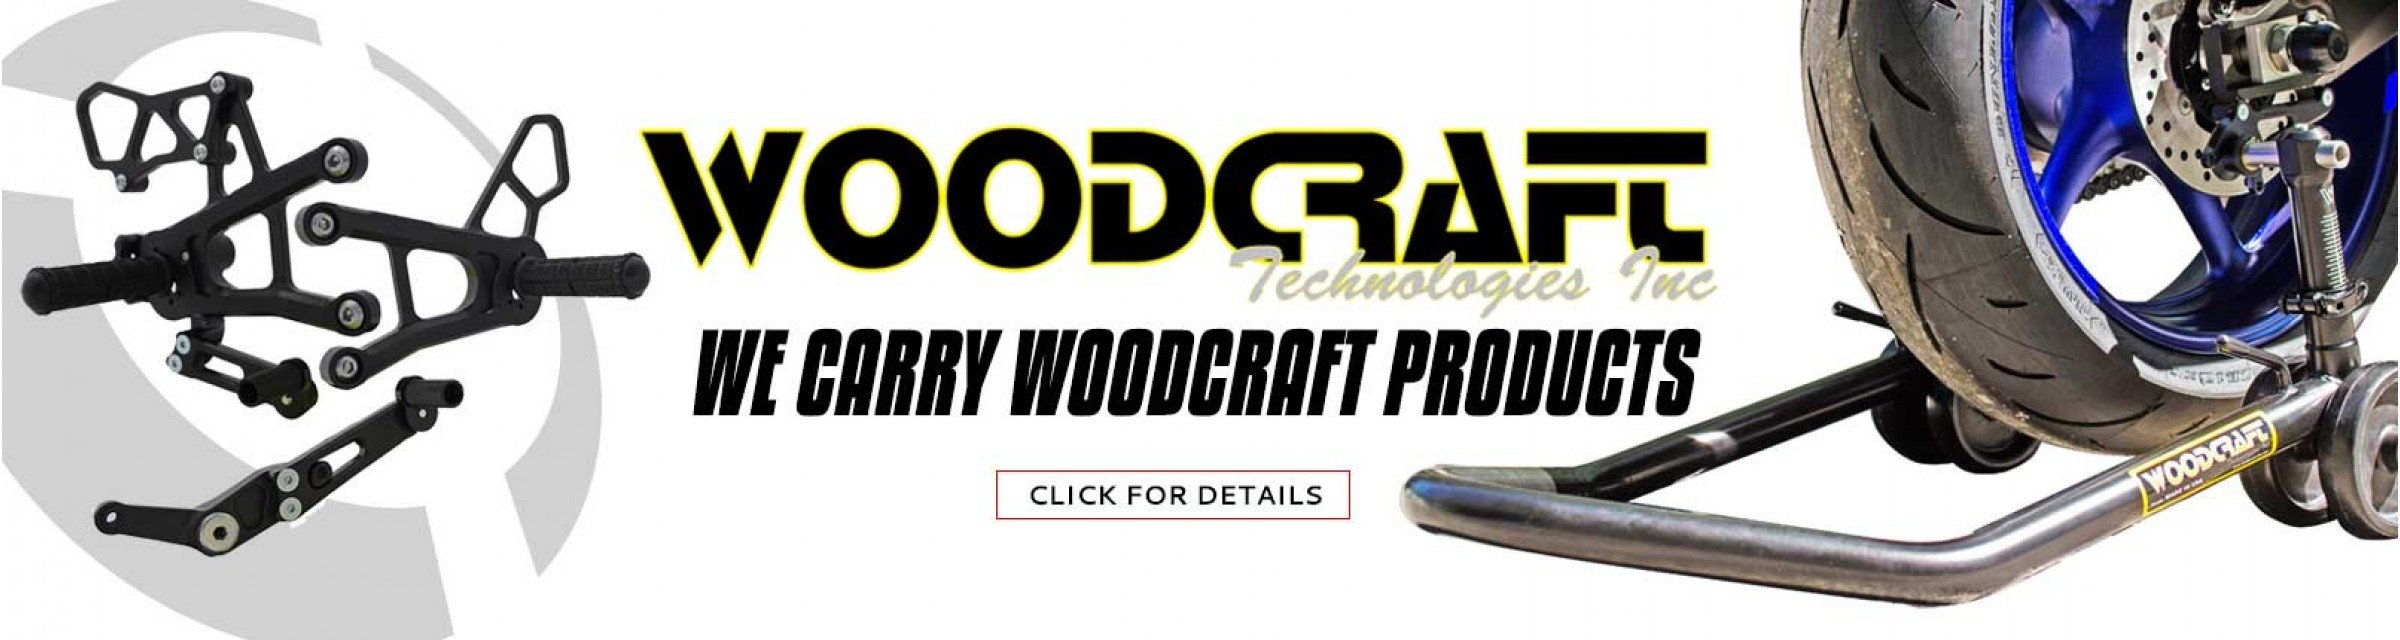 Woodcraft Stands